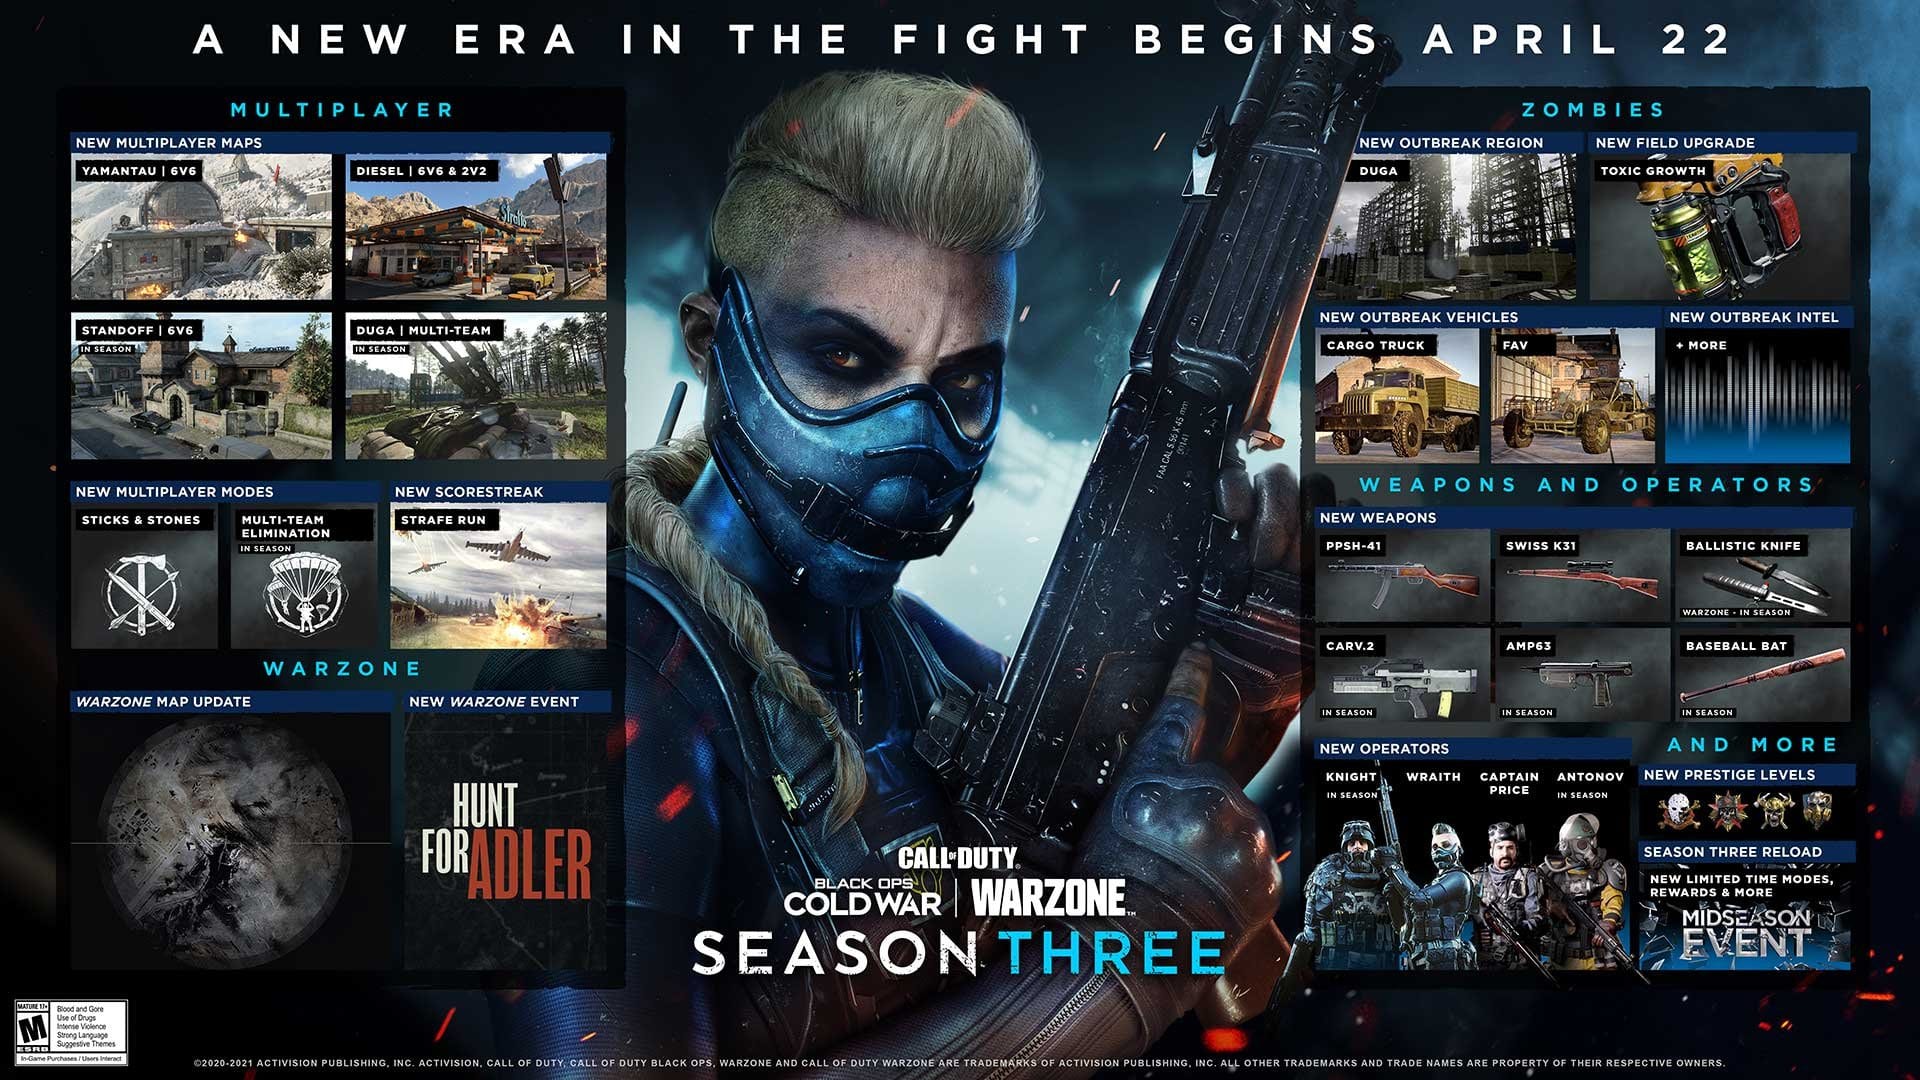 Black Ops Cold War and Warzone Season 3 roadmap